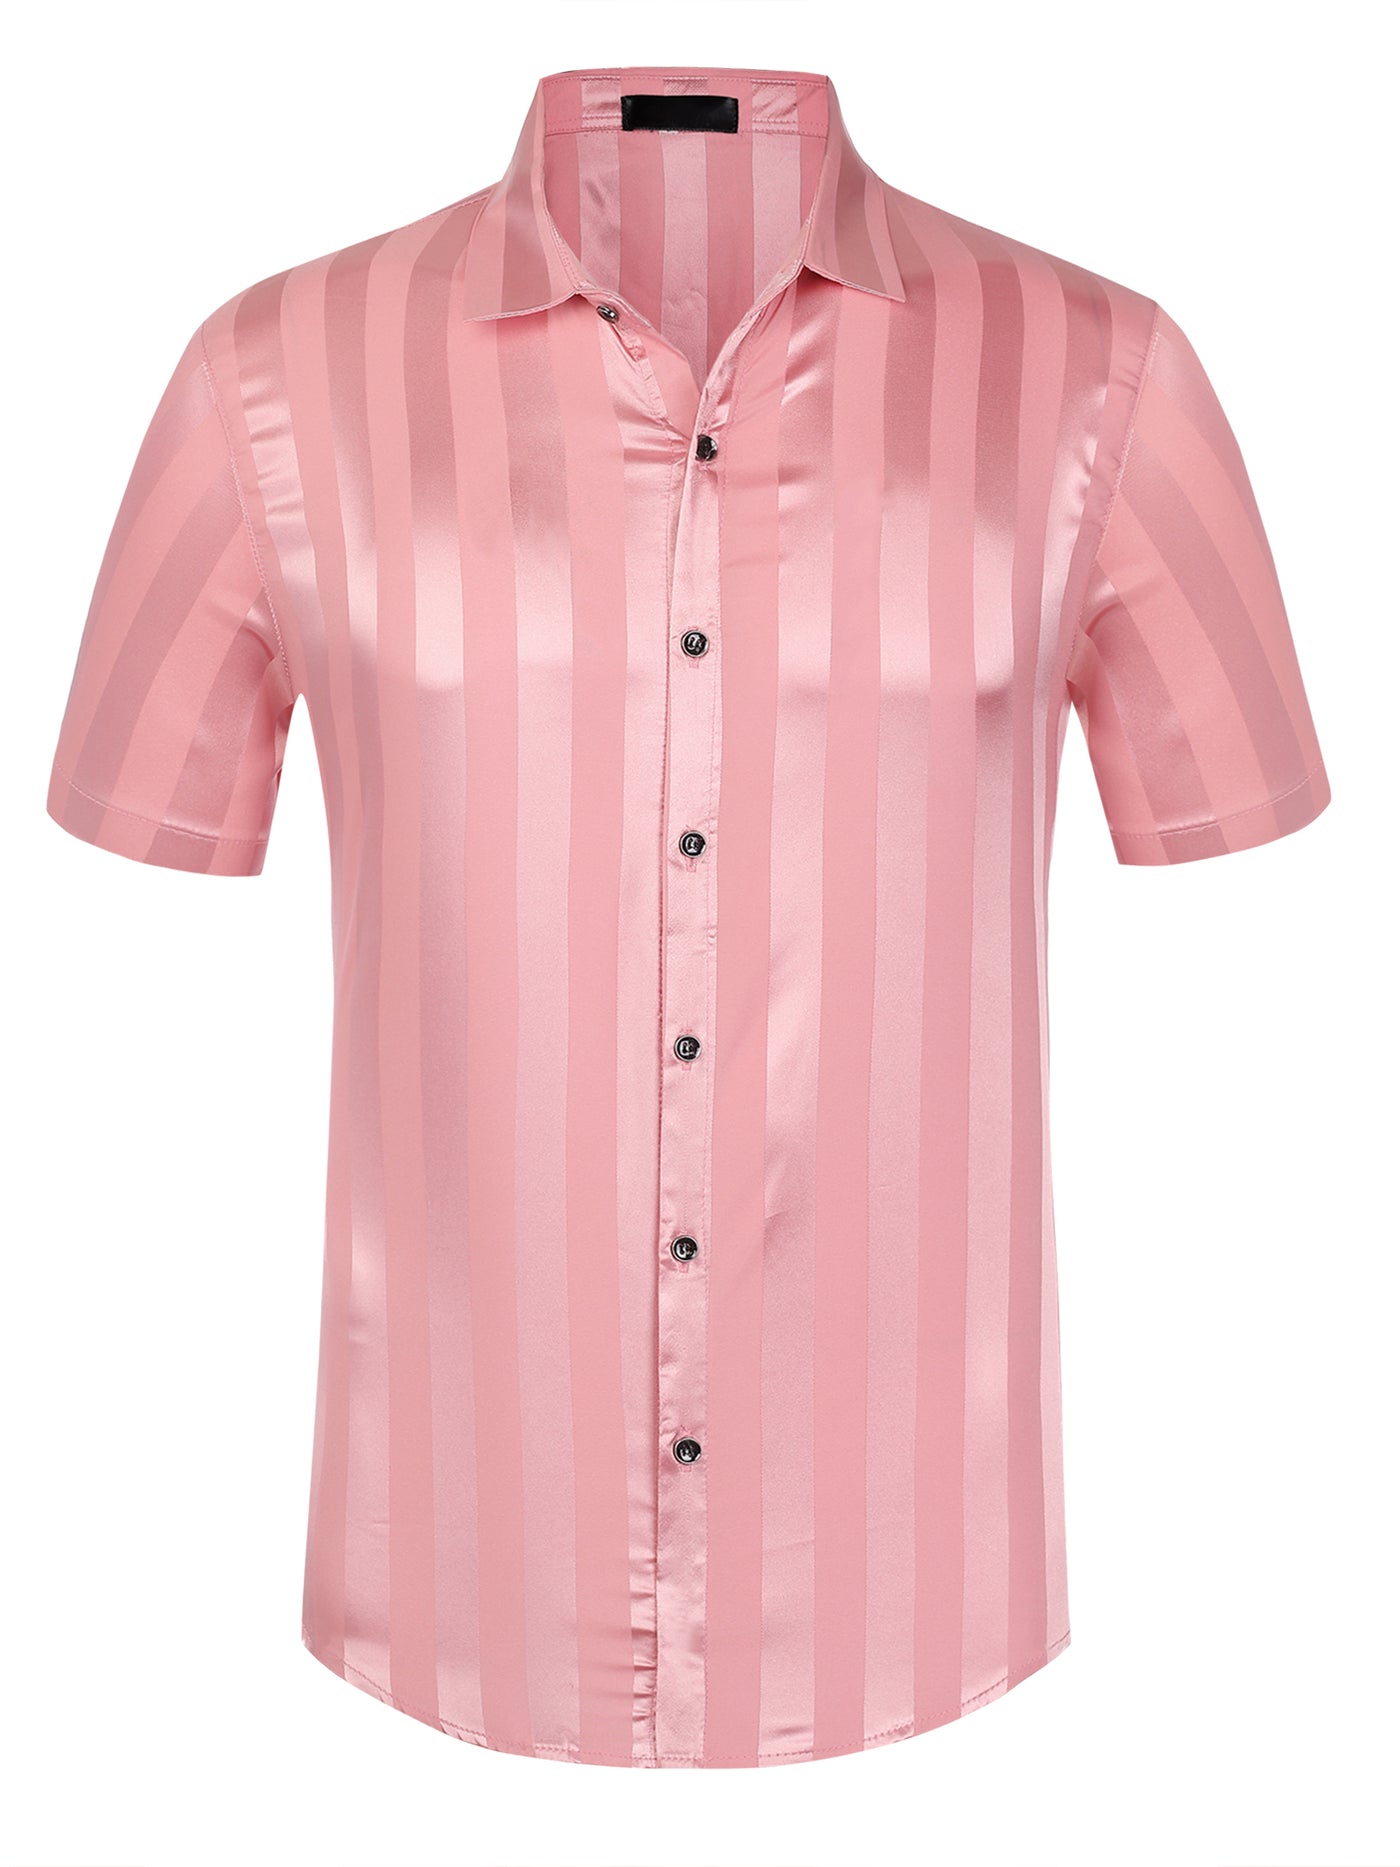 Bublédon Satin Summer Point Collar Short Sleeves Button Down Striped Shirts